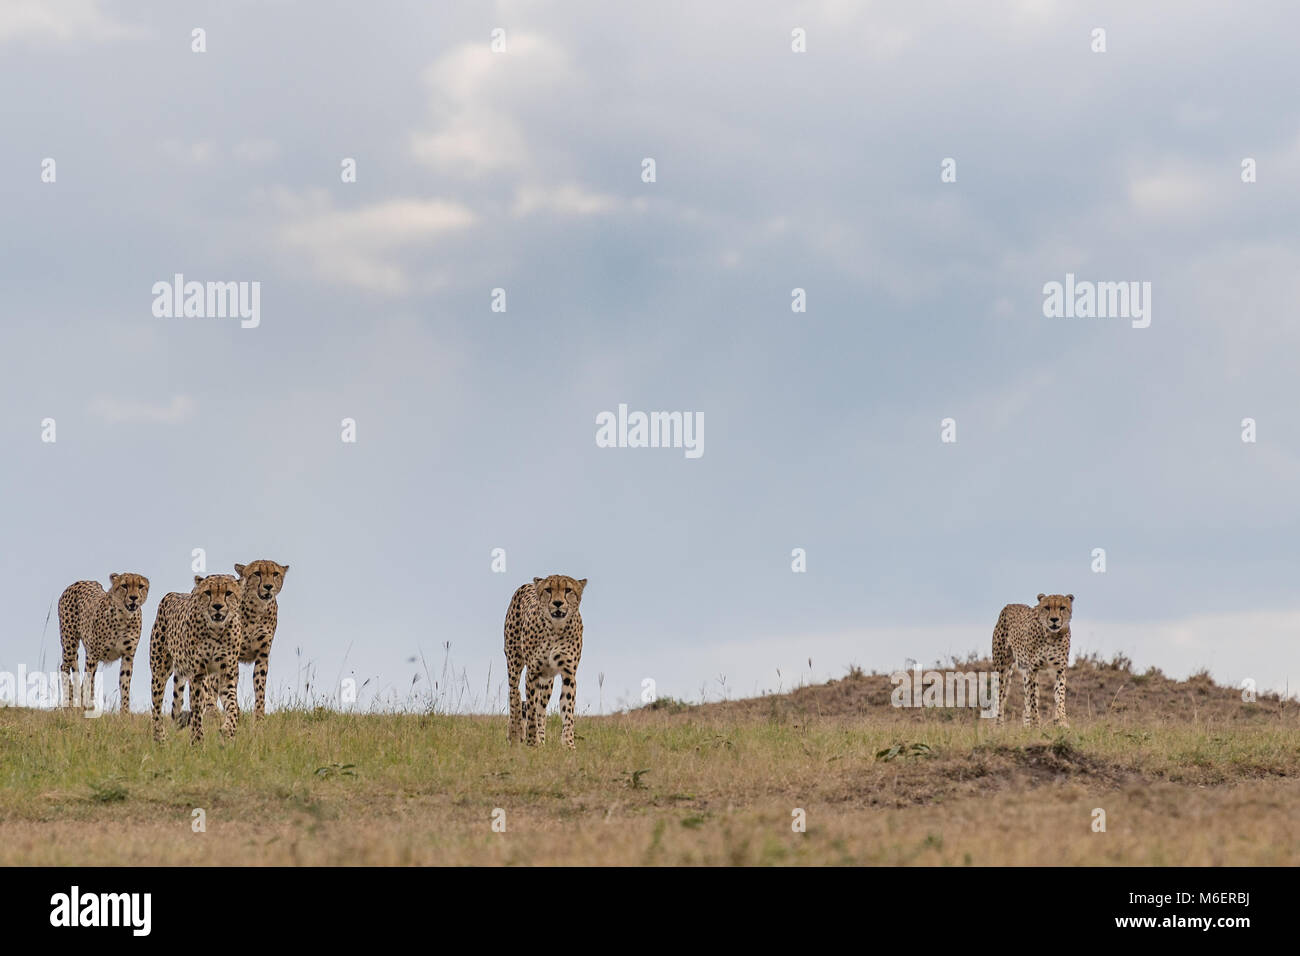 Five Musketeers - Cheetahs - African Wildlife Stock Photo